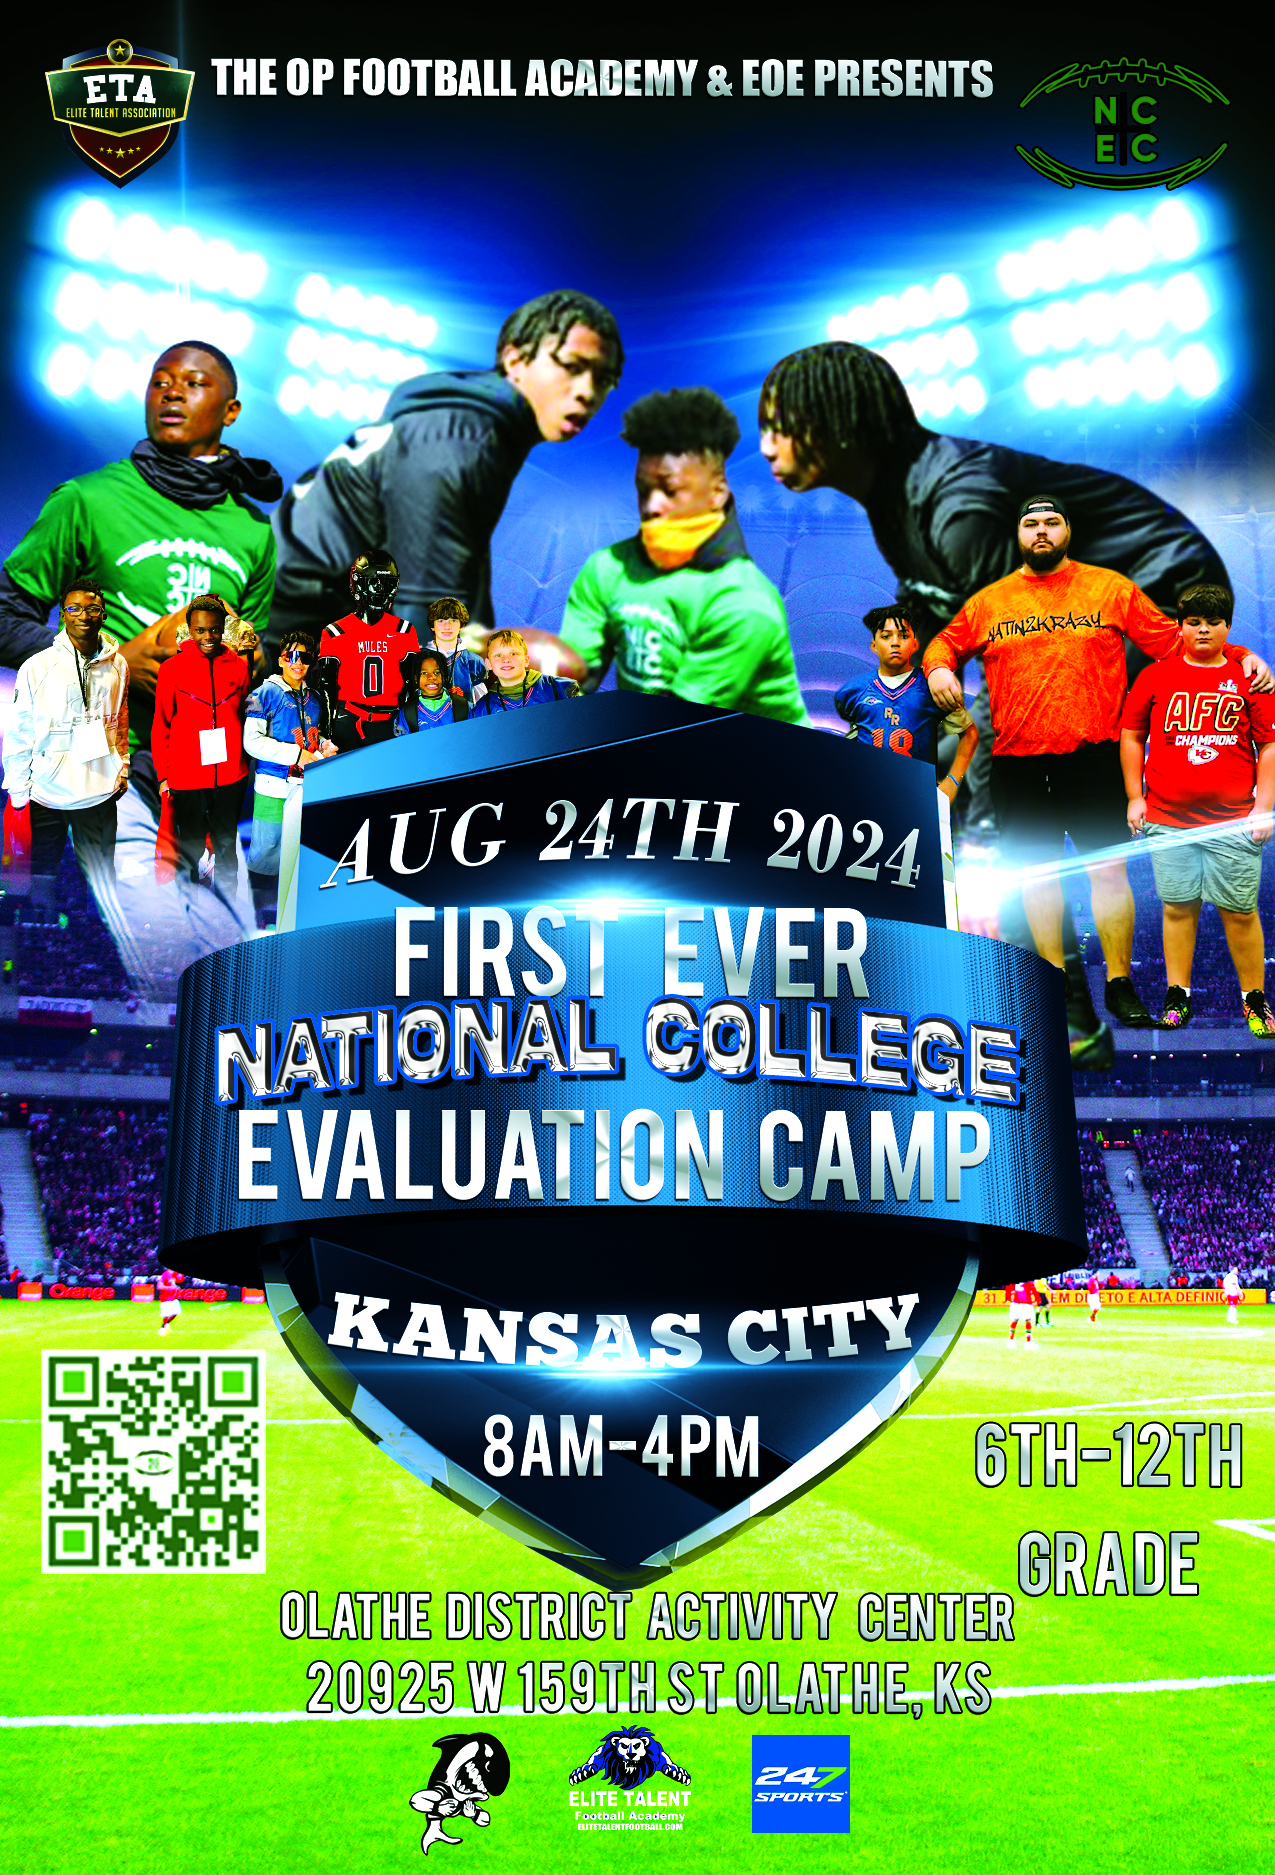 Elite Talent Football Announces Kansas City Area Camp